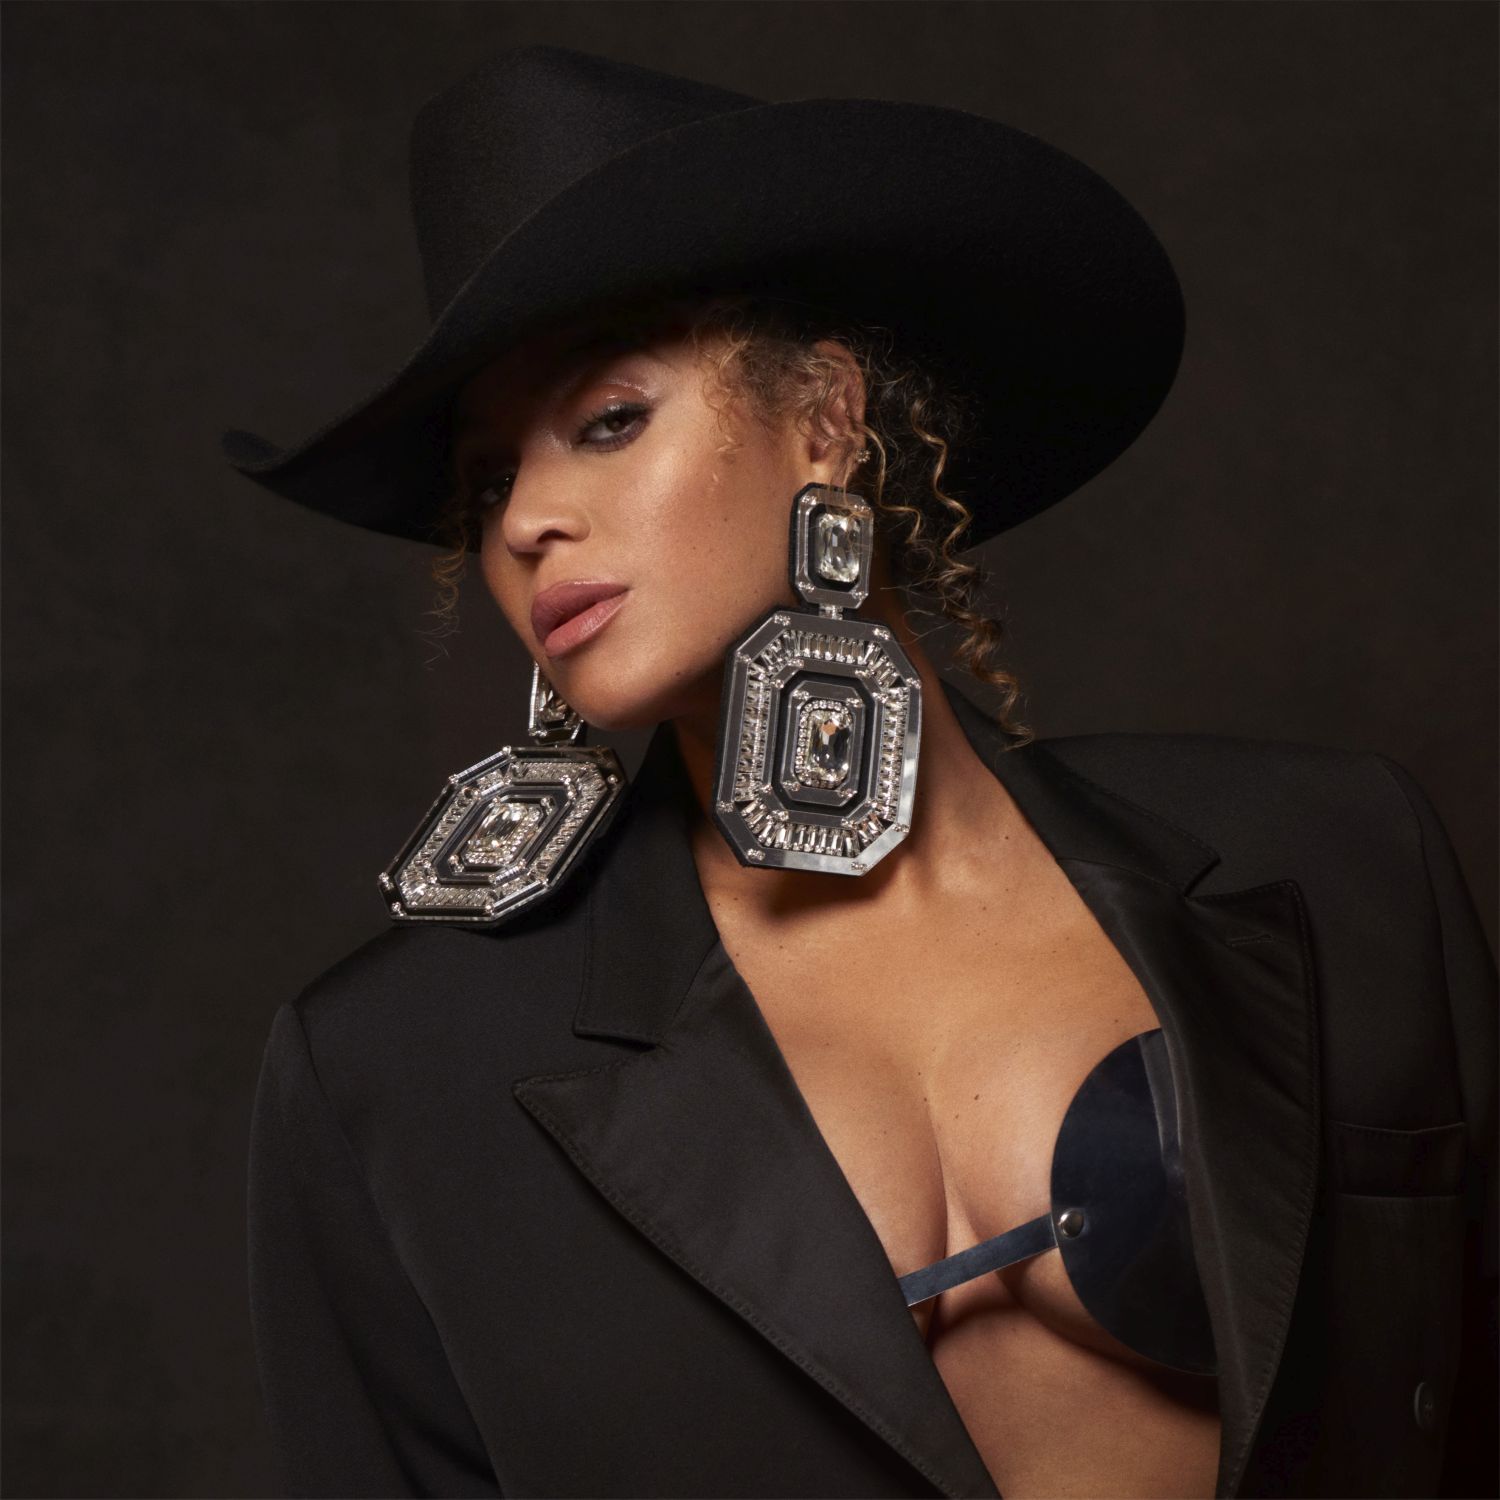 Beyoncé Giselle Knowles nuovo album e tour - immagini